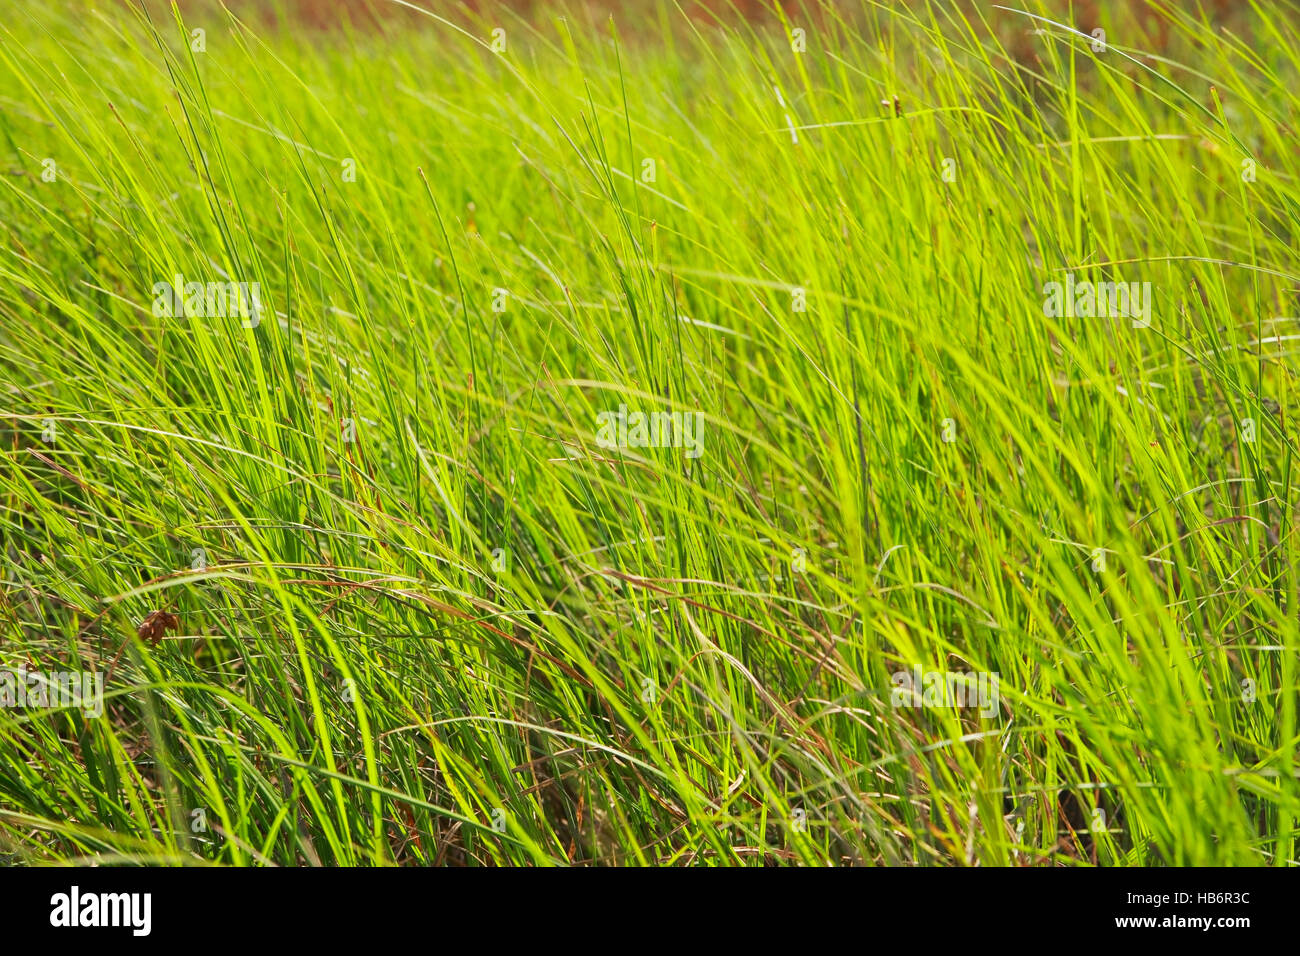 Reeds, young shoots close-up Stock Photo